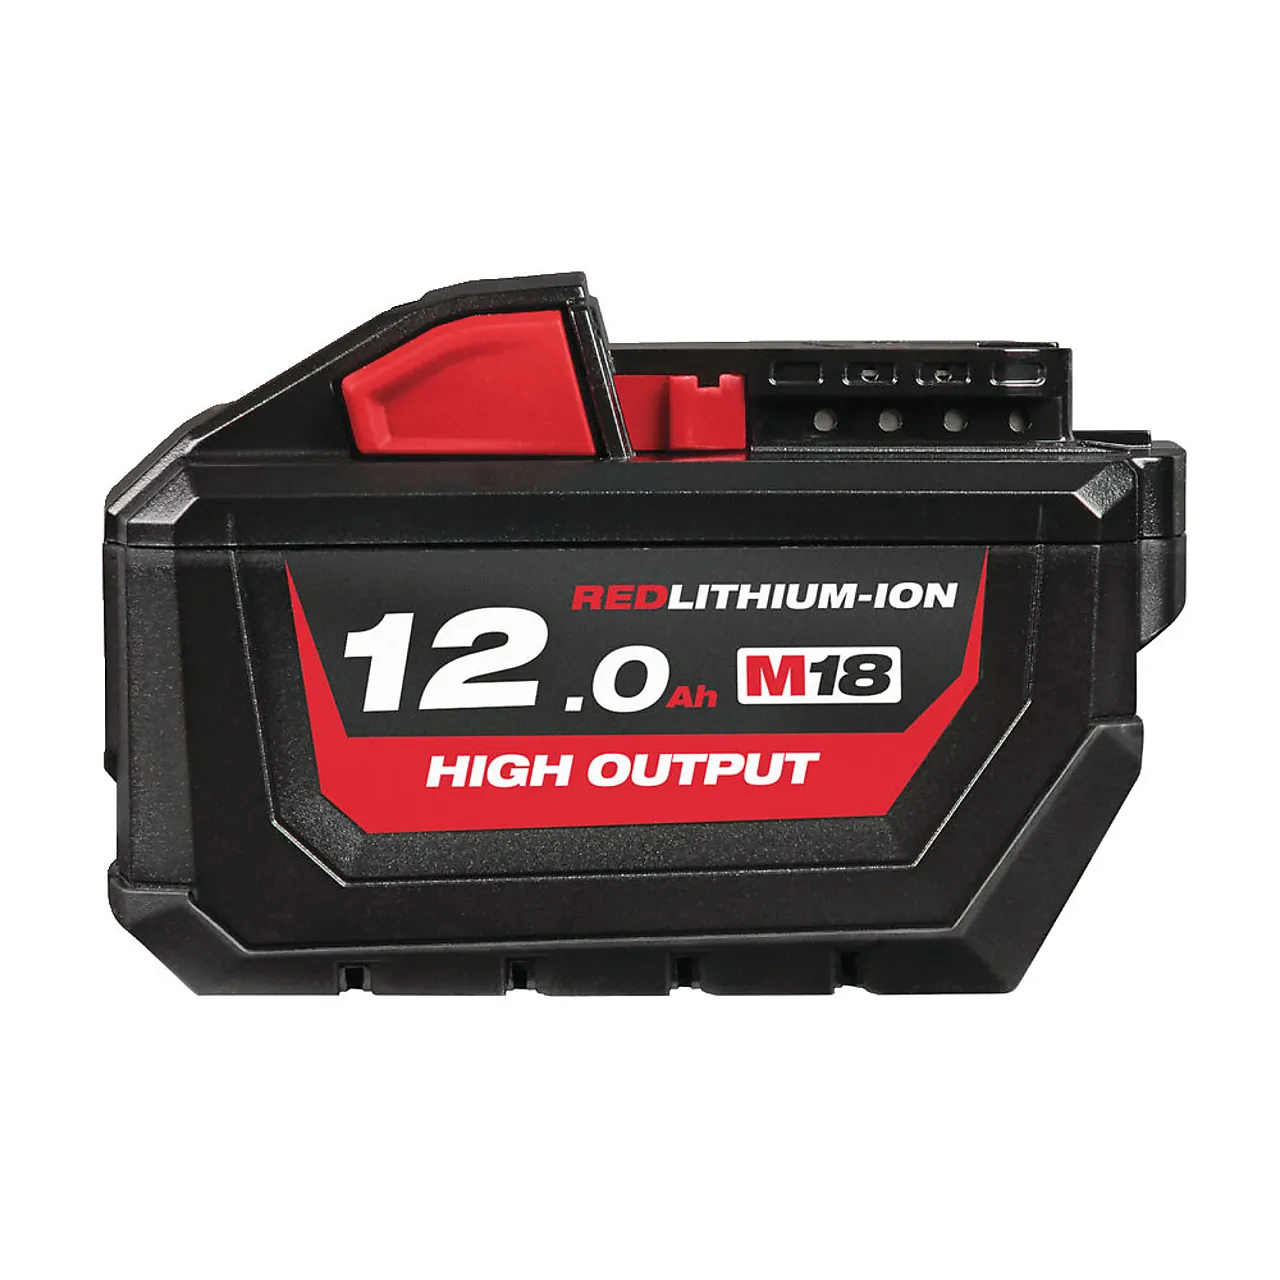 Batteri M18 HPB12 12,0 Ah null - null - 1